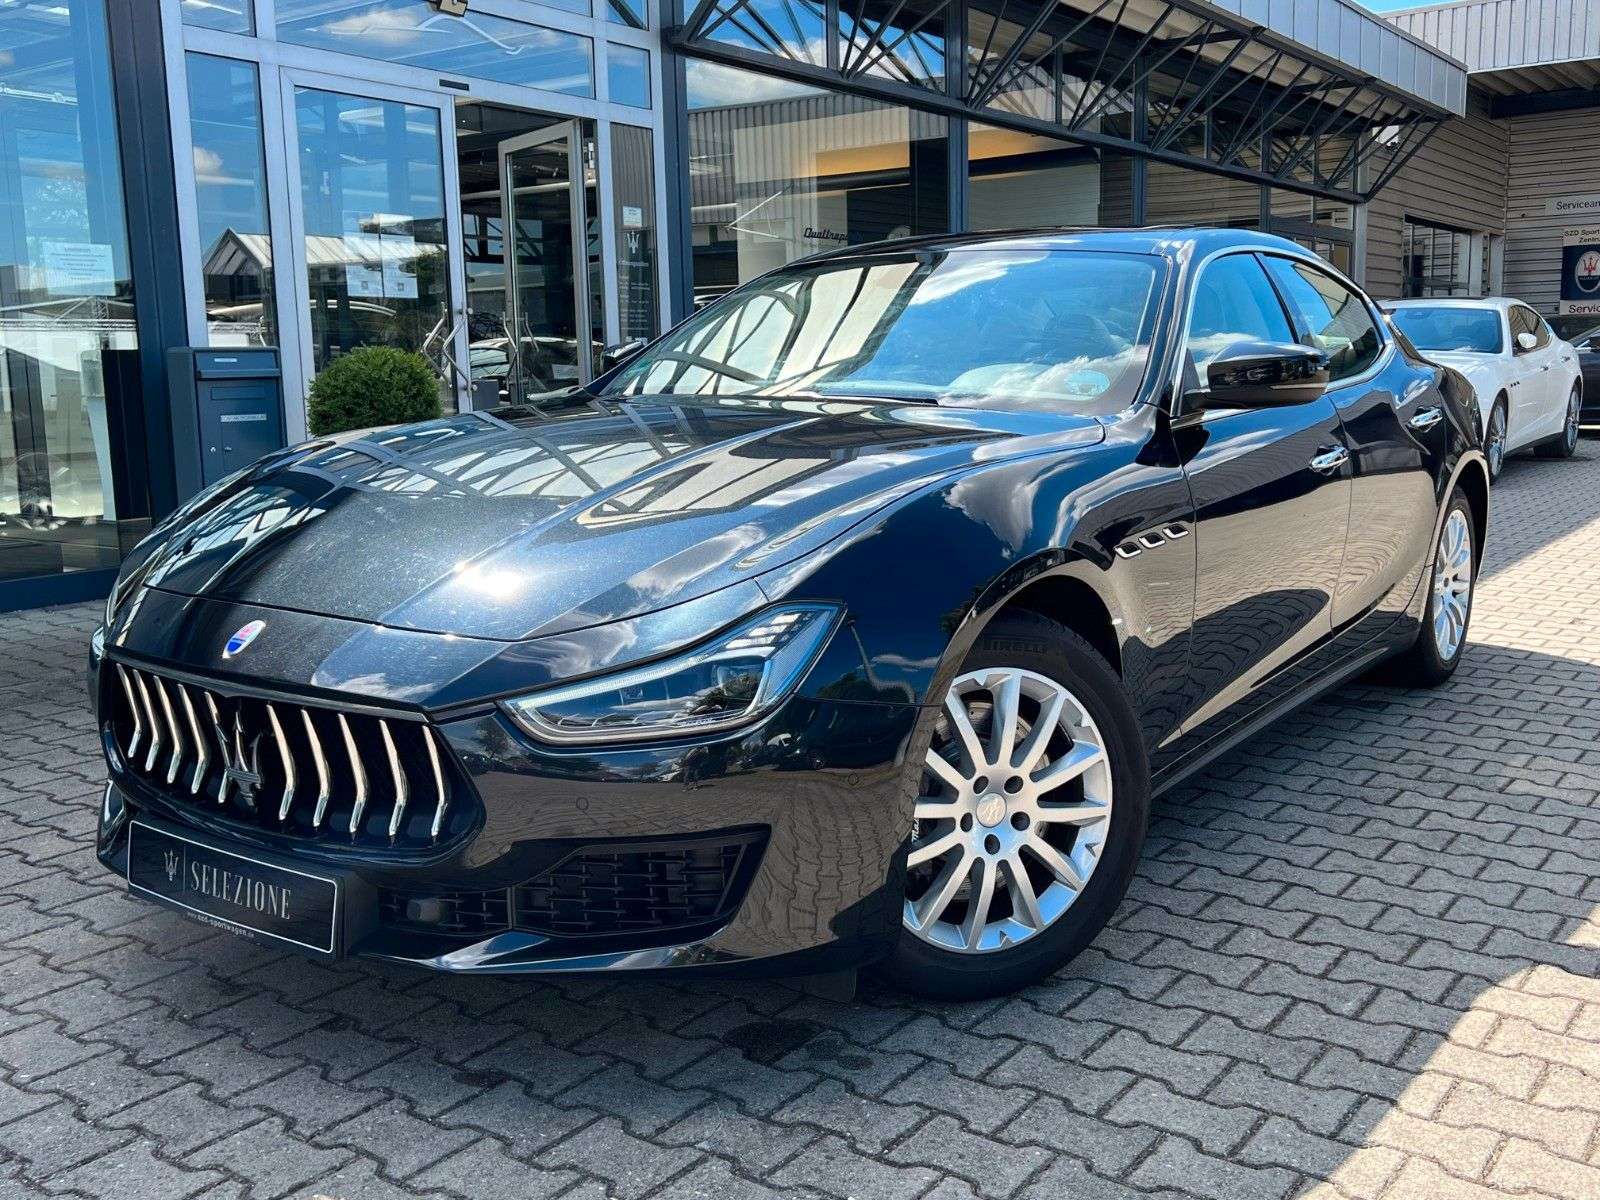 Maserati Ghibli Sedan in Black used in Königsbrunn for € 54,000.-